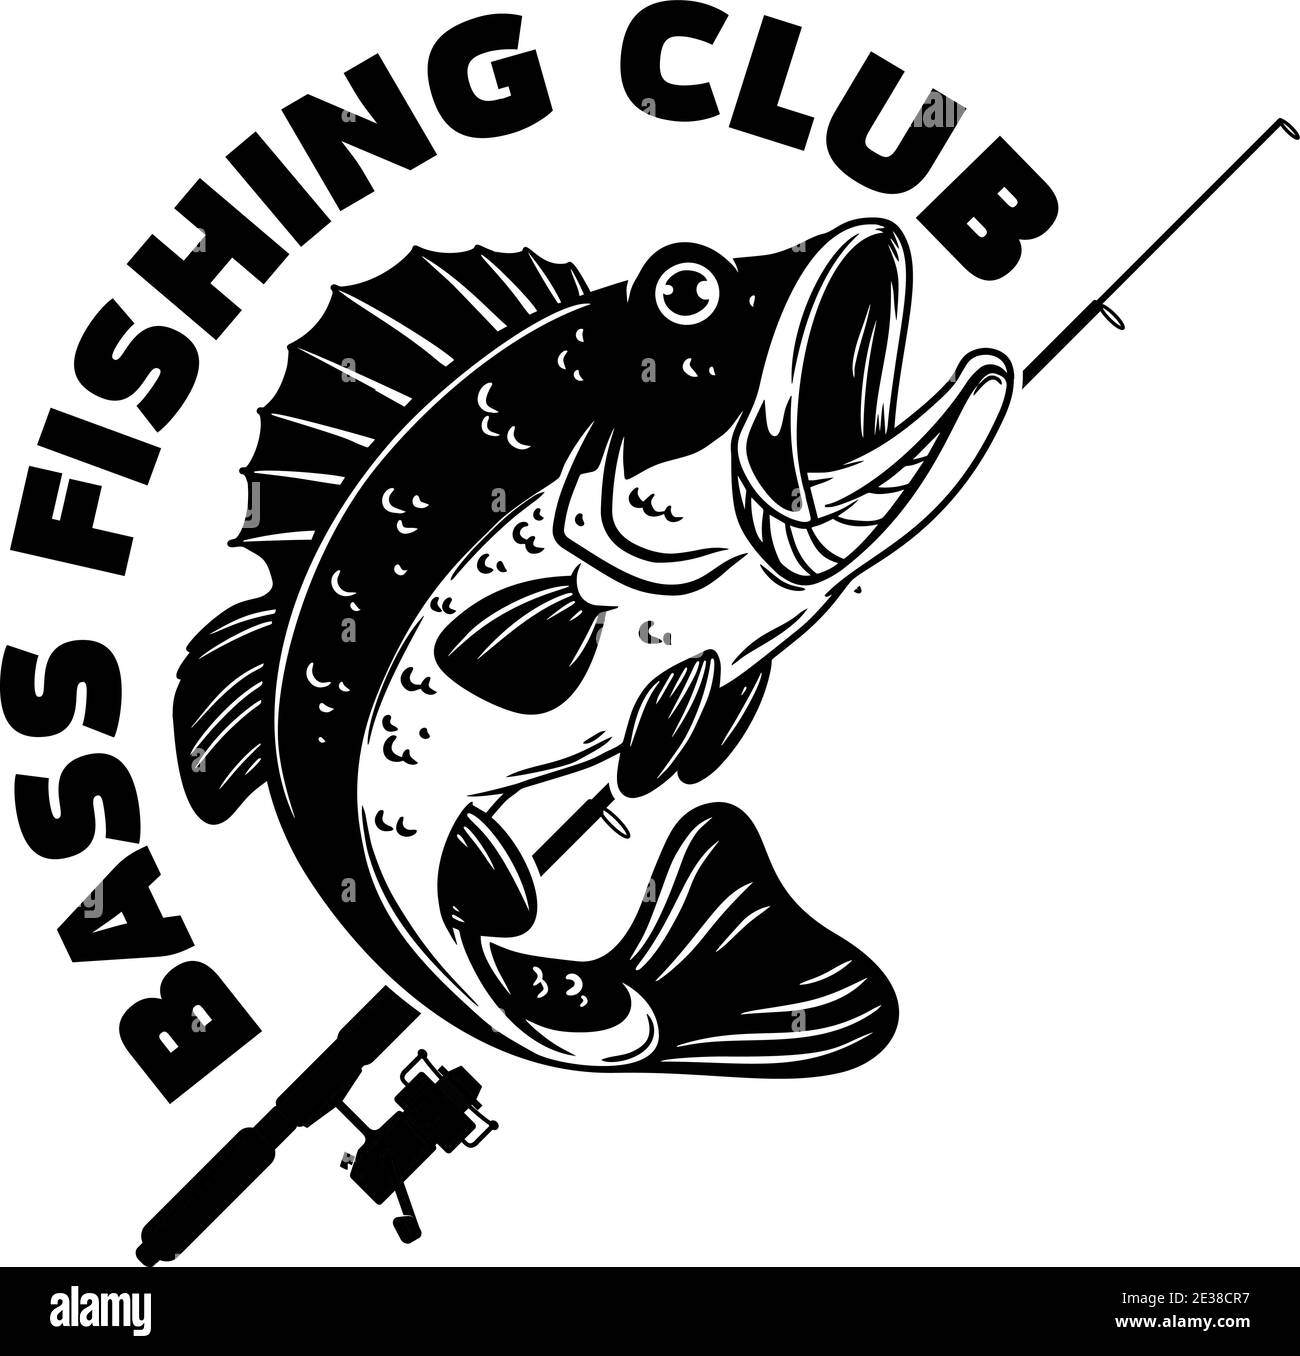 Bass fishing club. Illustration of bass fish and fishing rod. Design ...